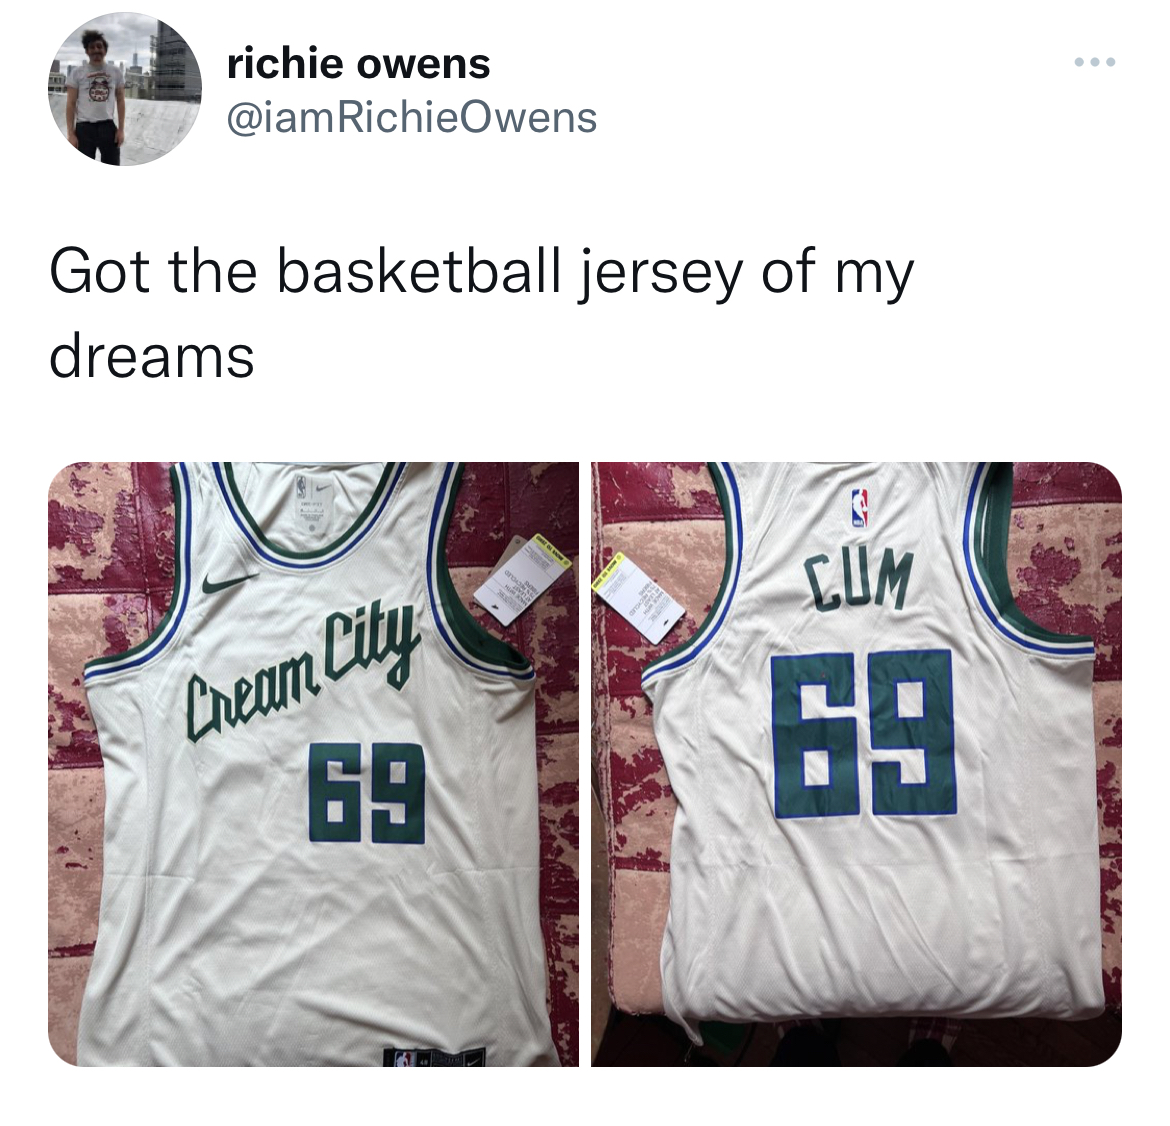 jersey - richie owens Got the basketball jersey of my dreams Cream City 69 Cum 69